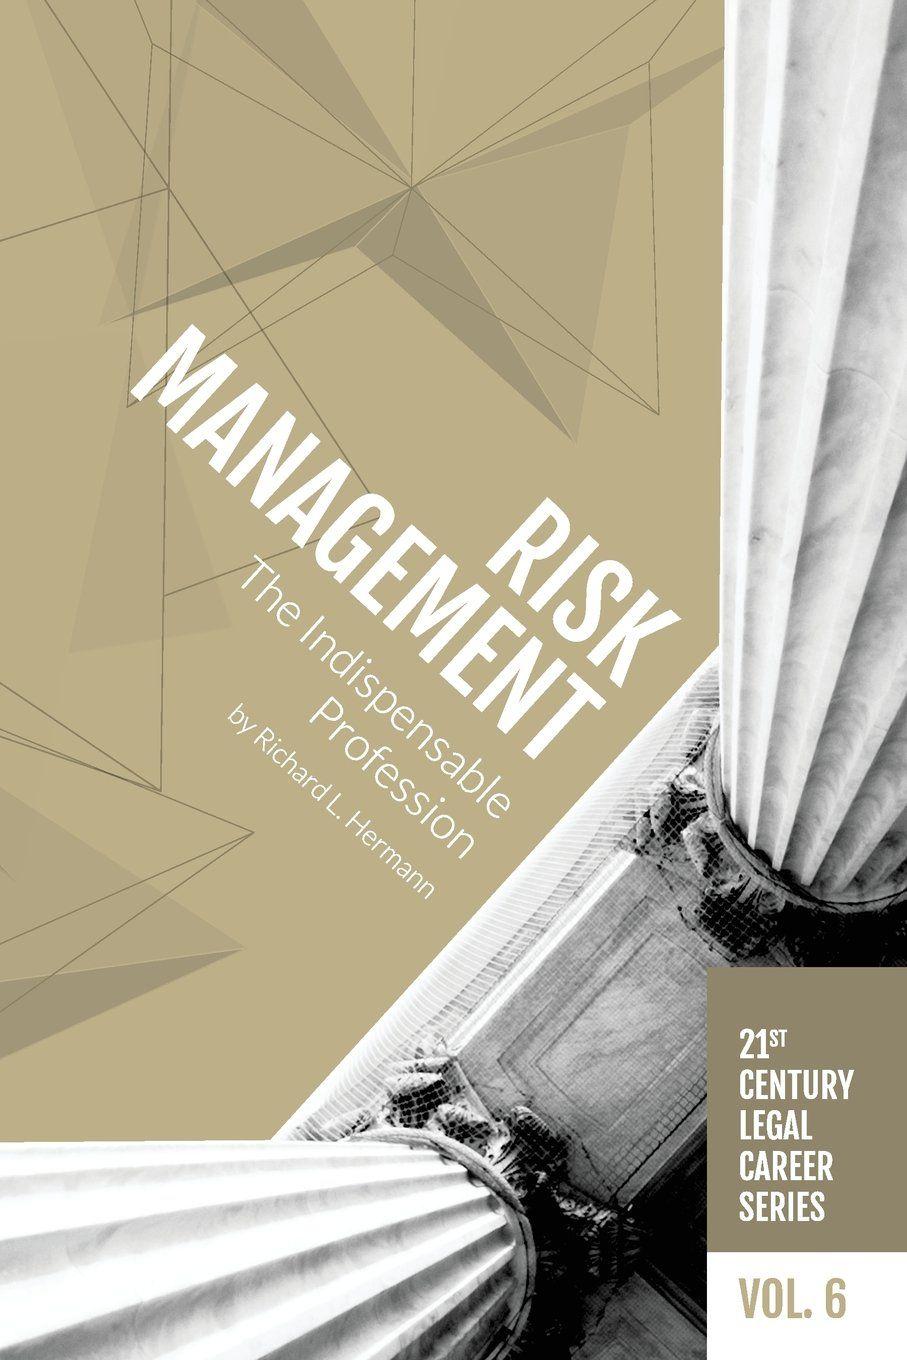 Century Risk Logo - Risk Management: The Indispensable Profession 21st Century Legal